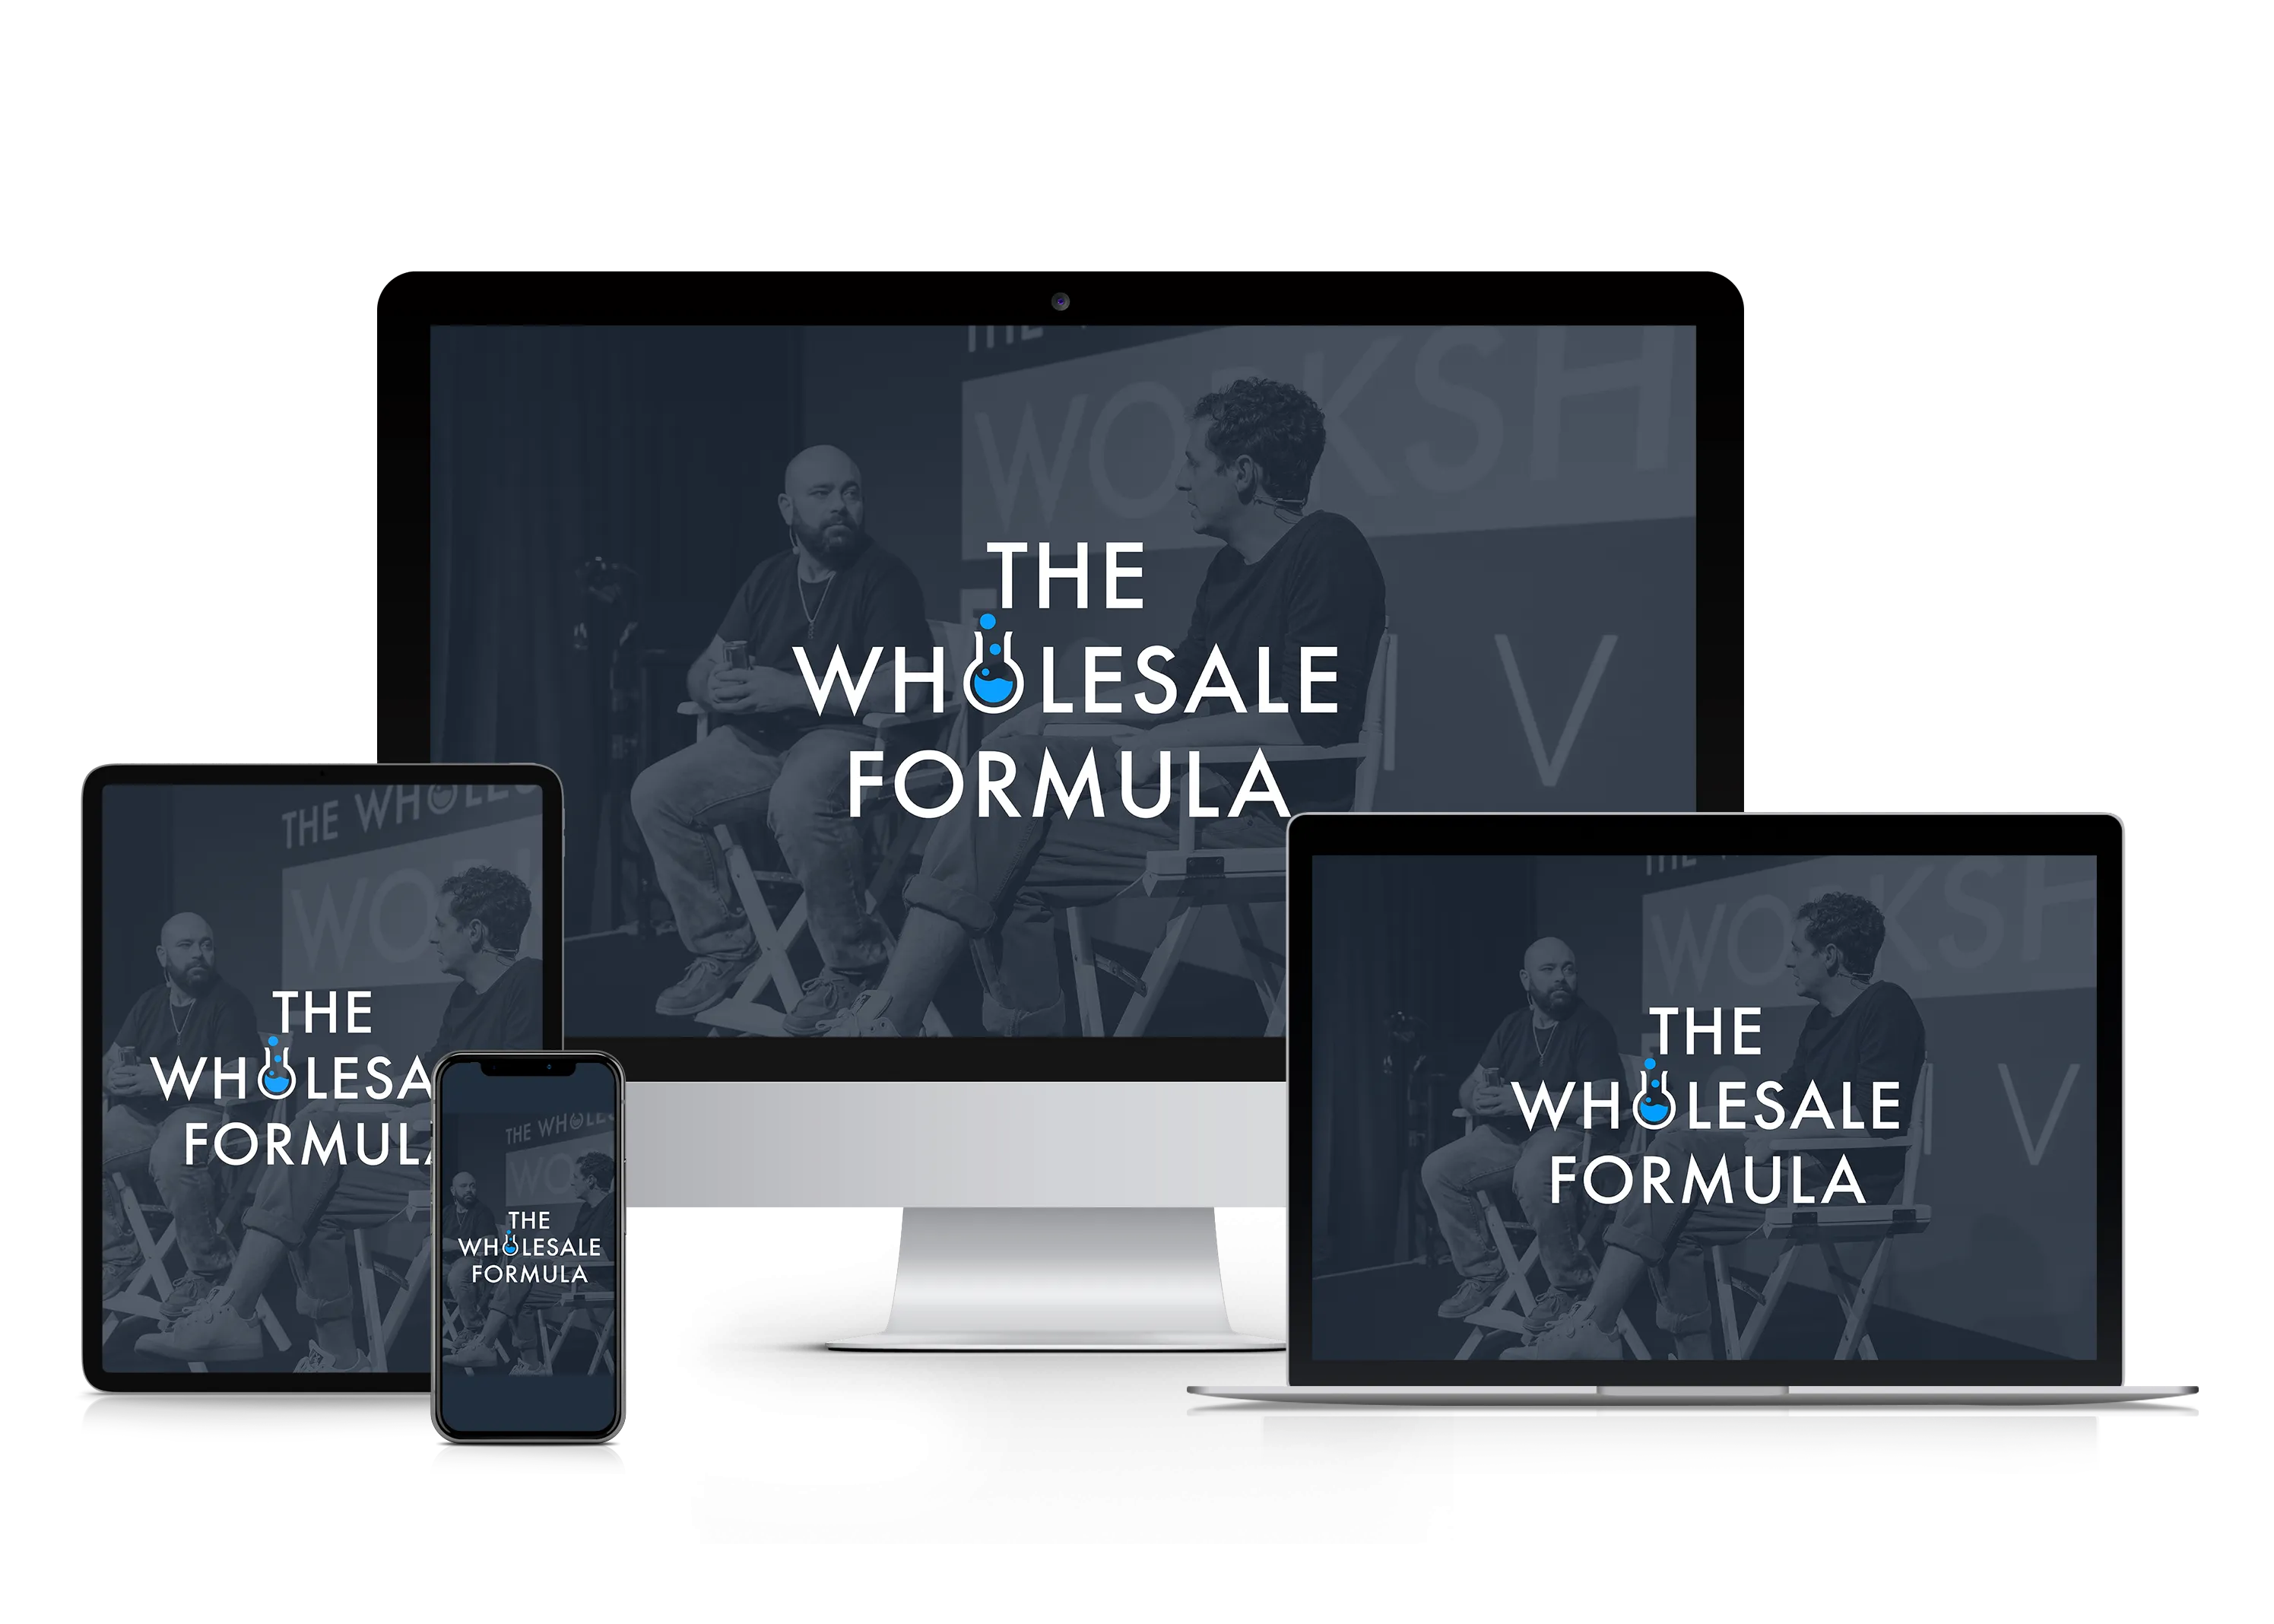 the whlesale formula